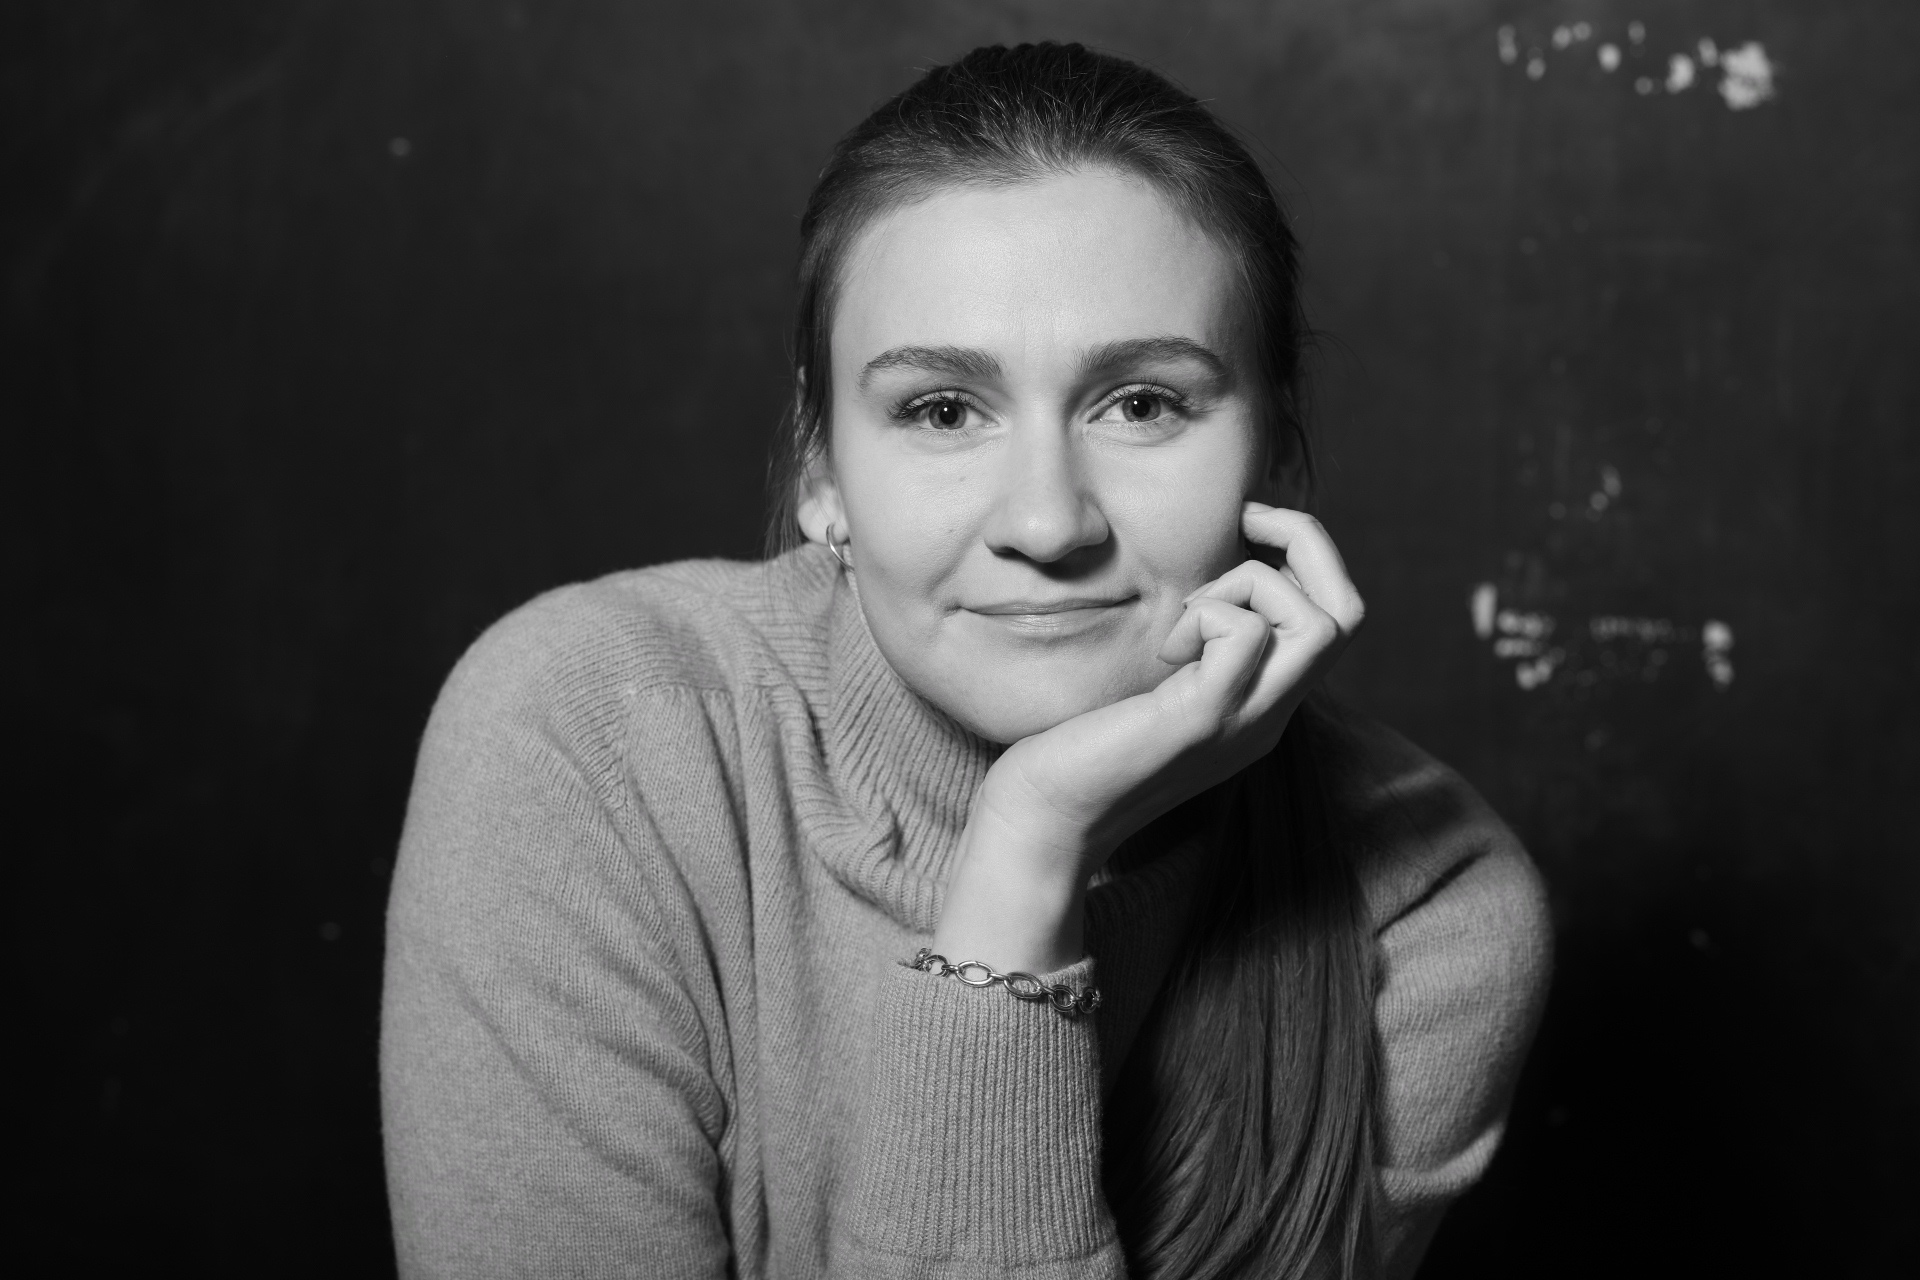 психолог в Минске Катерина Зданович, женский психолог онлайн